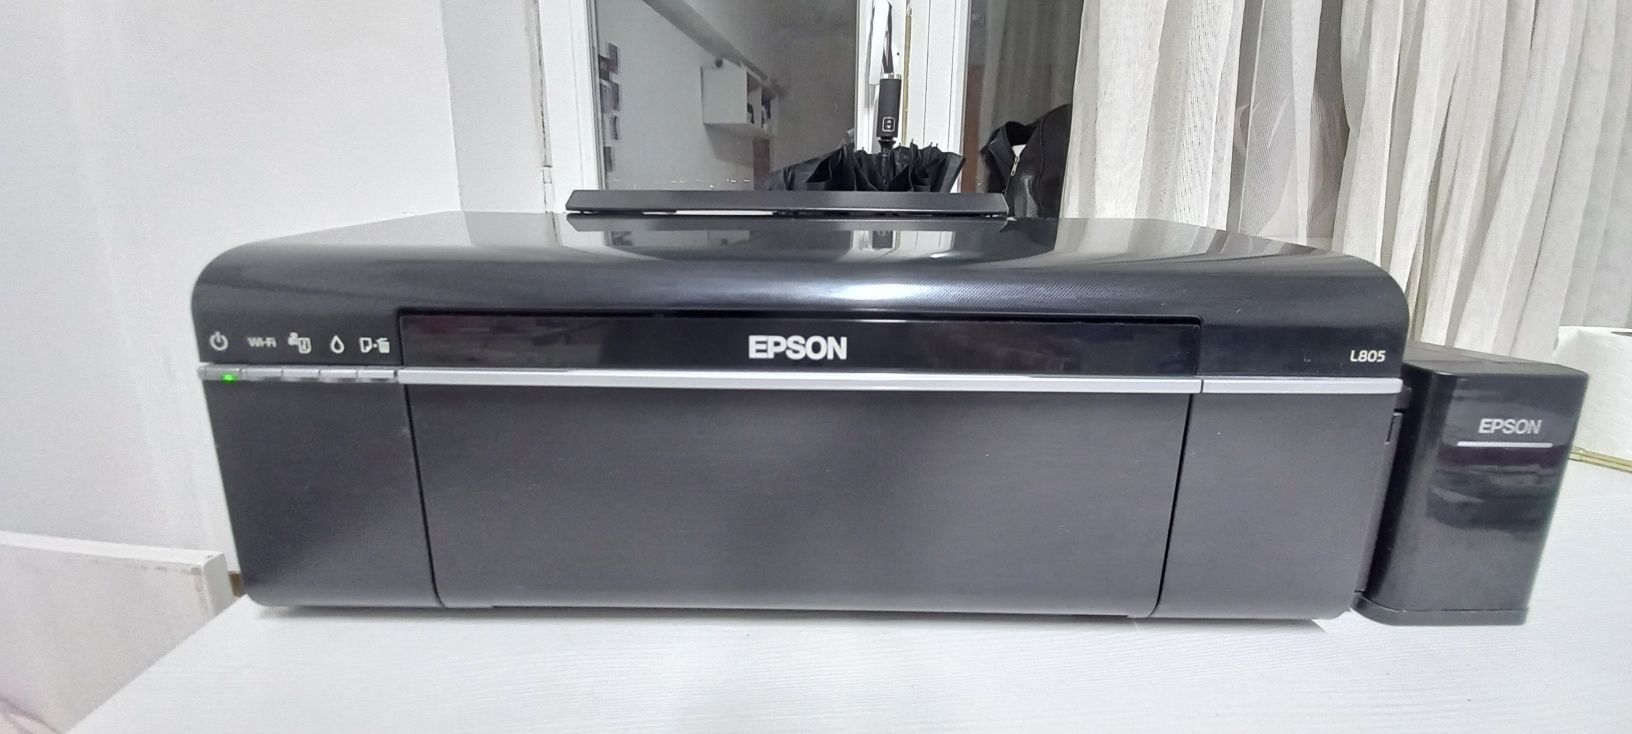 Epson l805 принтер